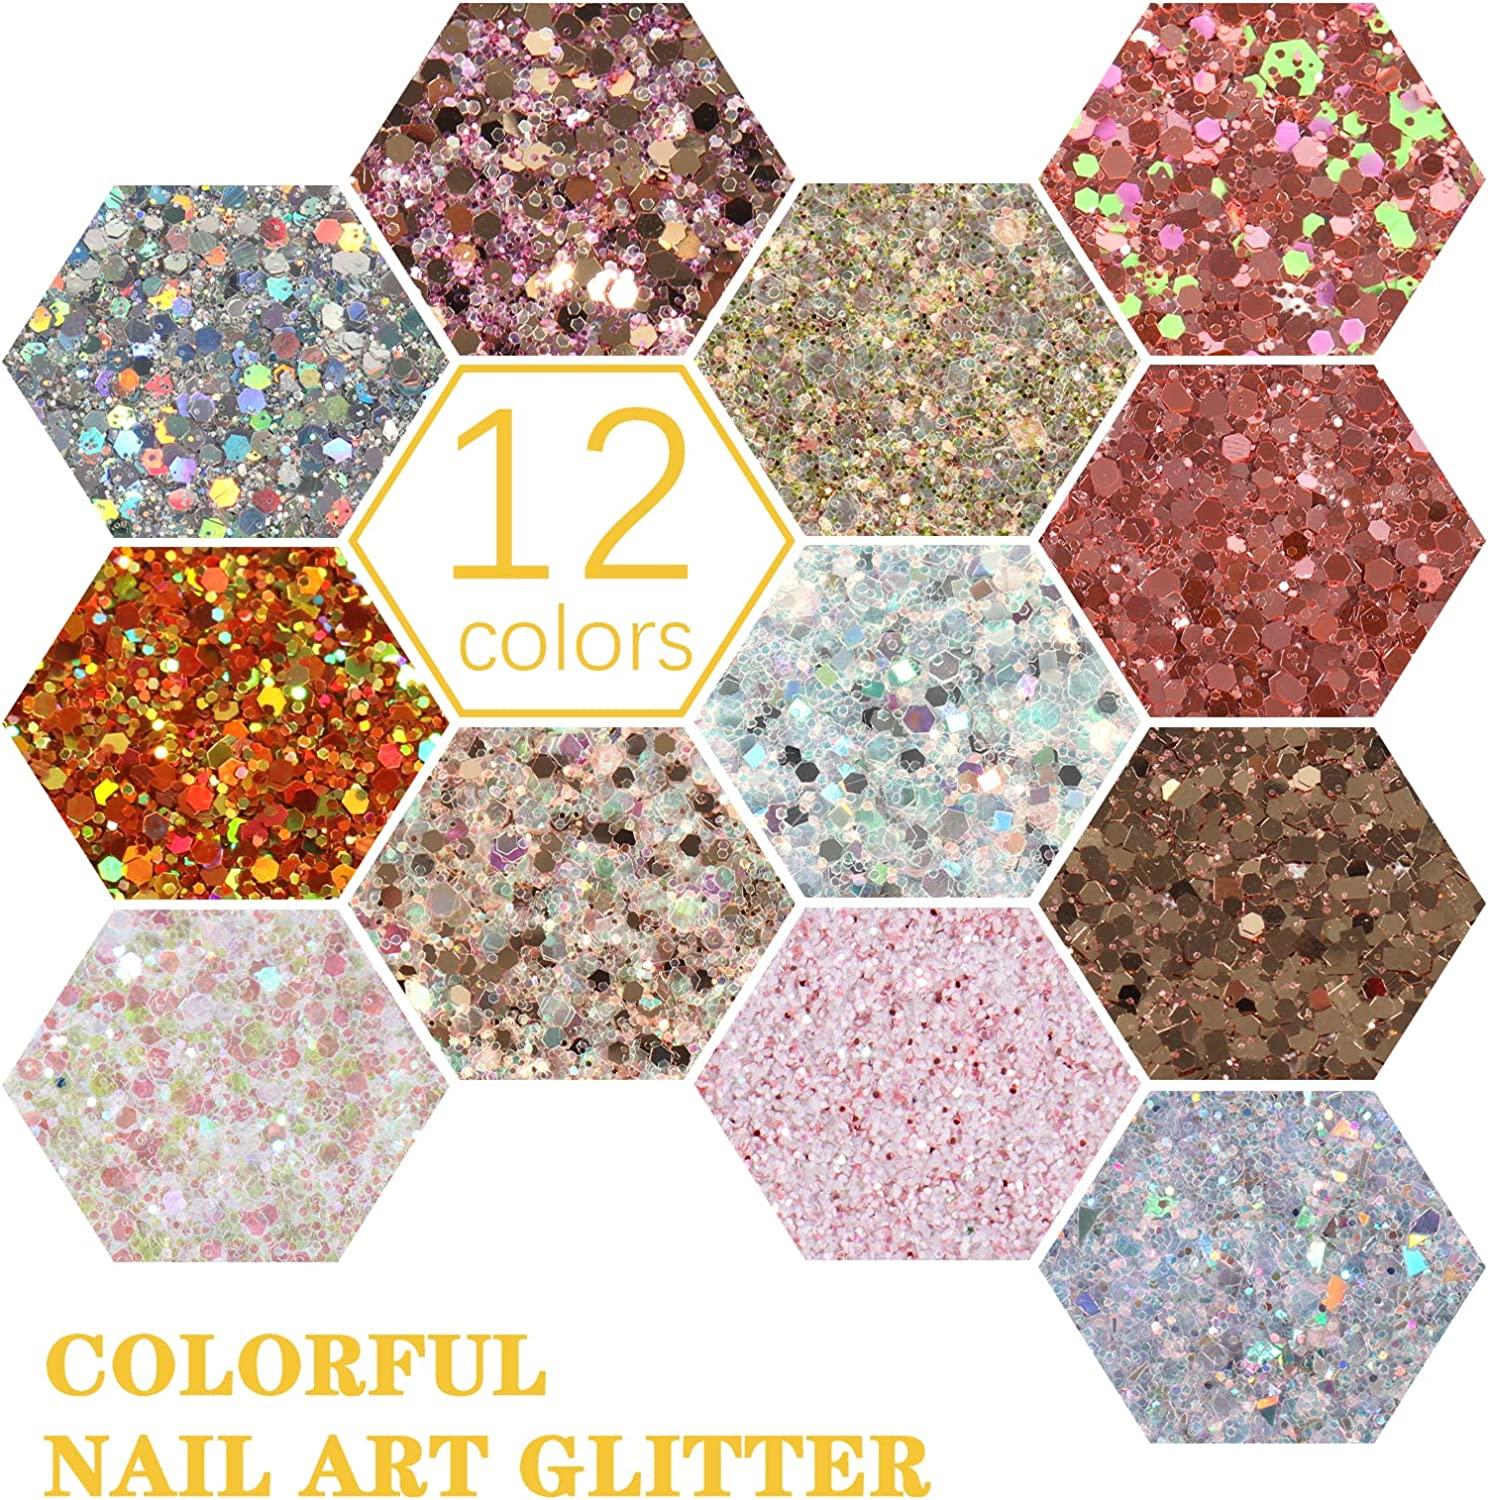 12 colors set 3 mm star shape glitter sequins 1.5 oz square bottle